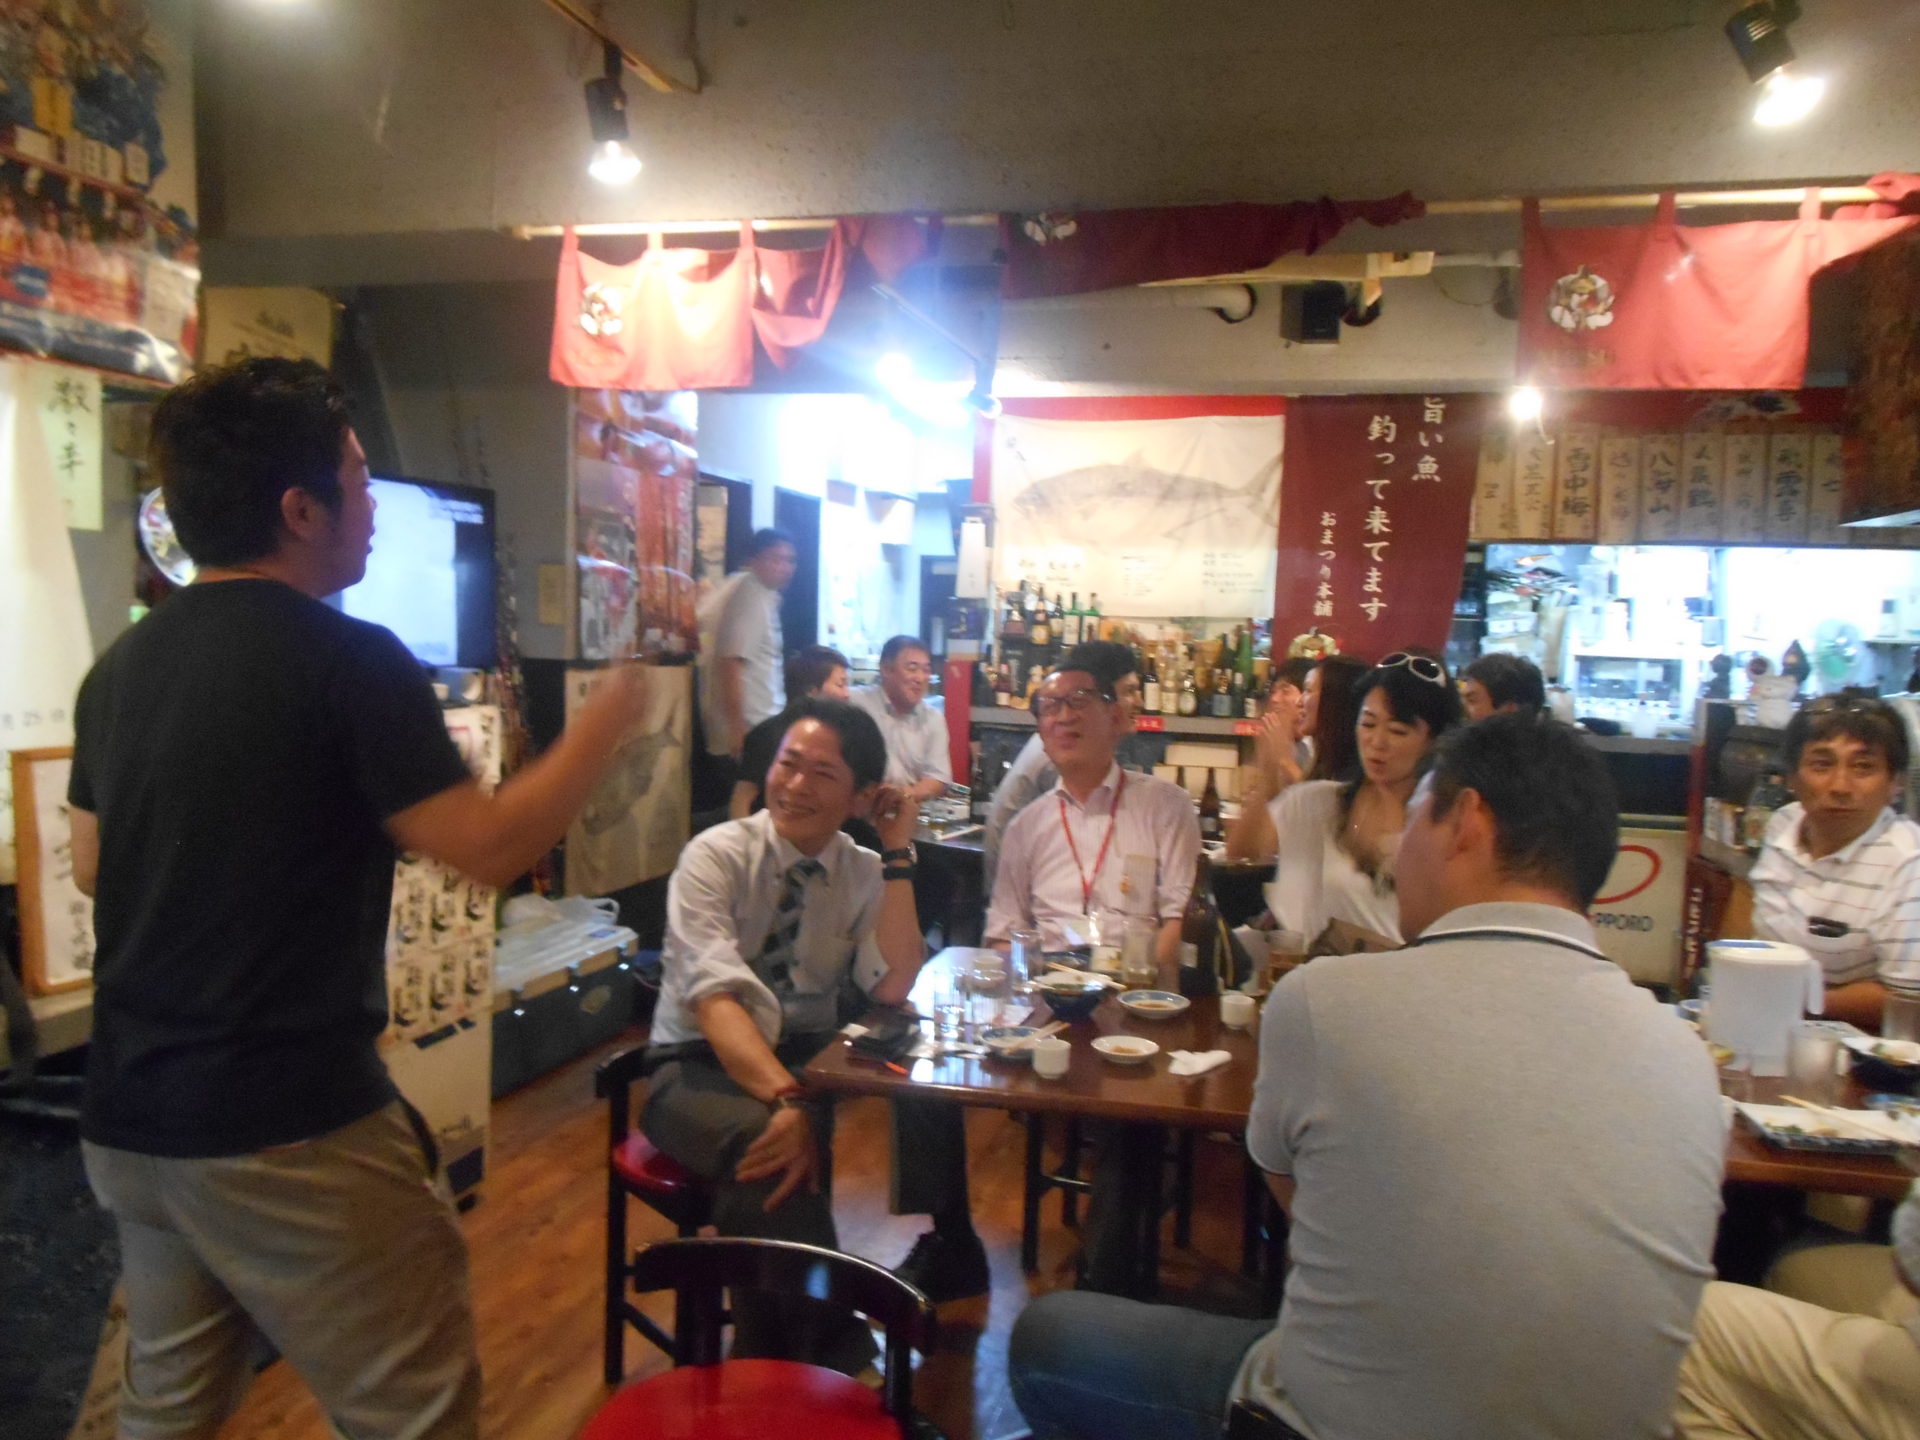 DSCN5651 1920x1440 - 2015年9月14日 AOsuki定例飲み会開催しました。